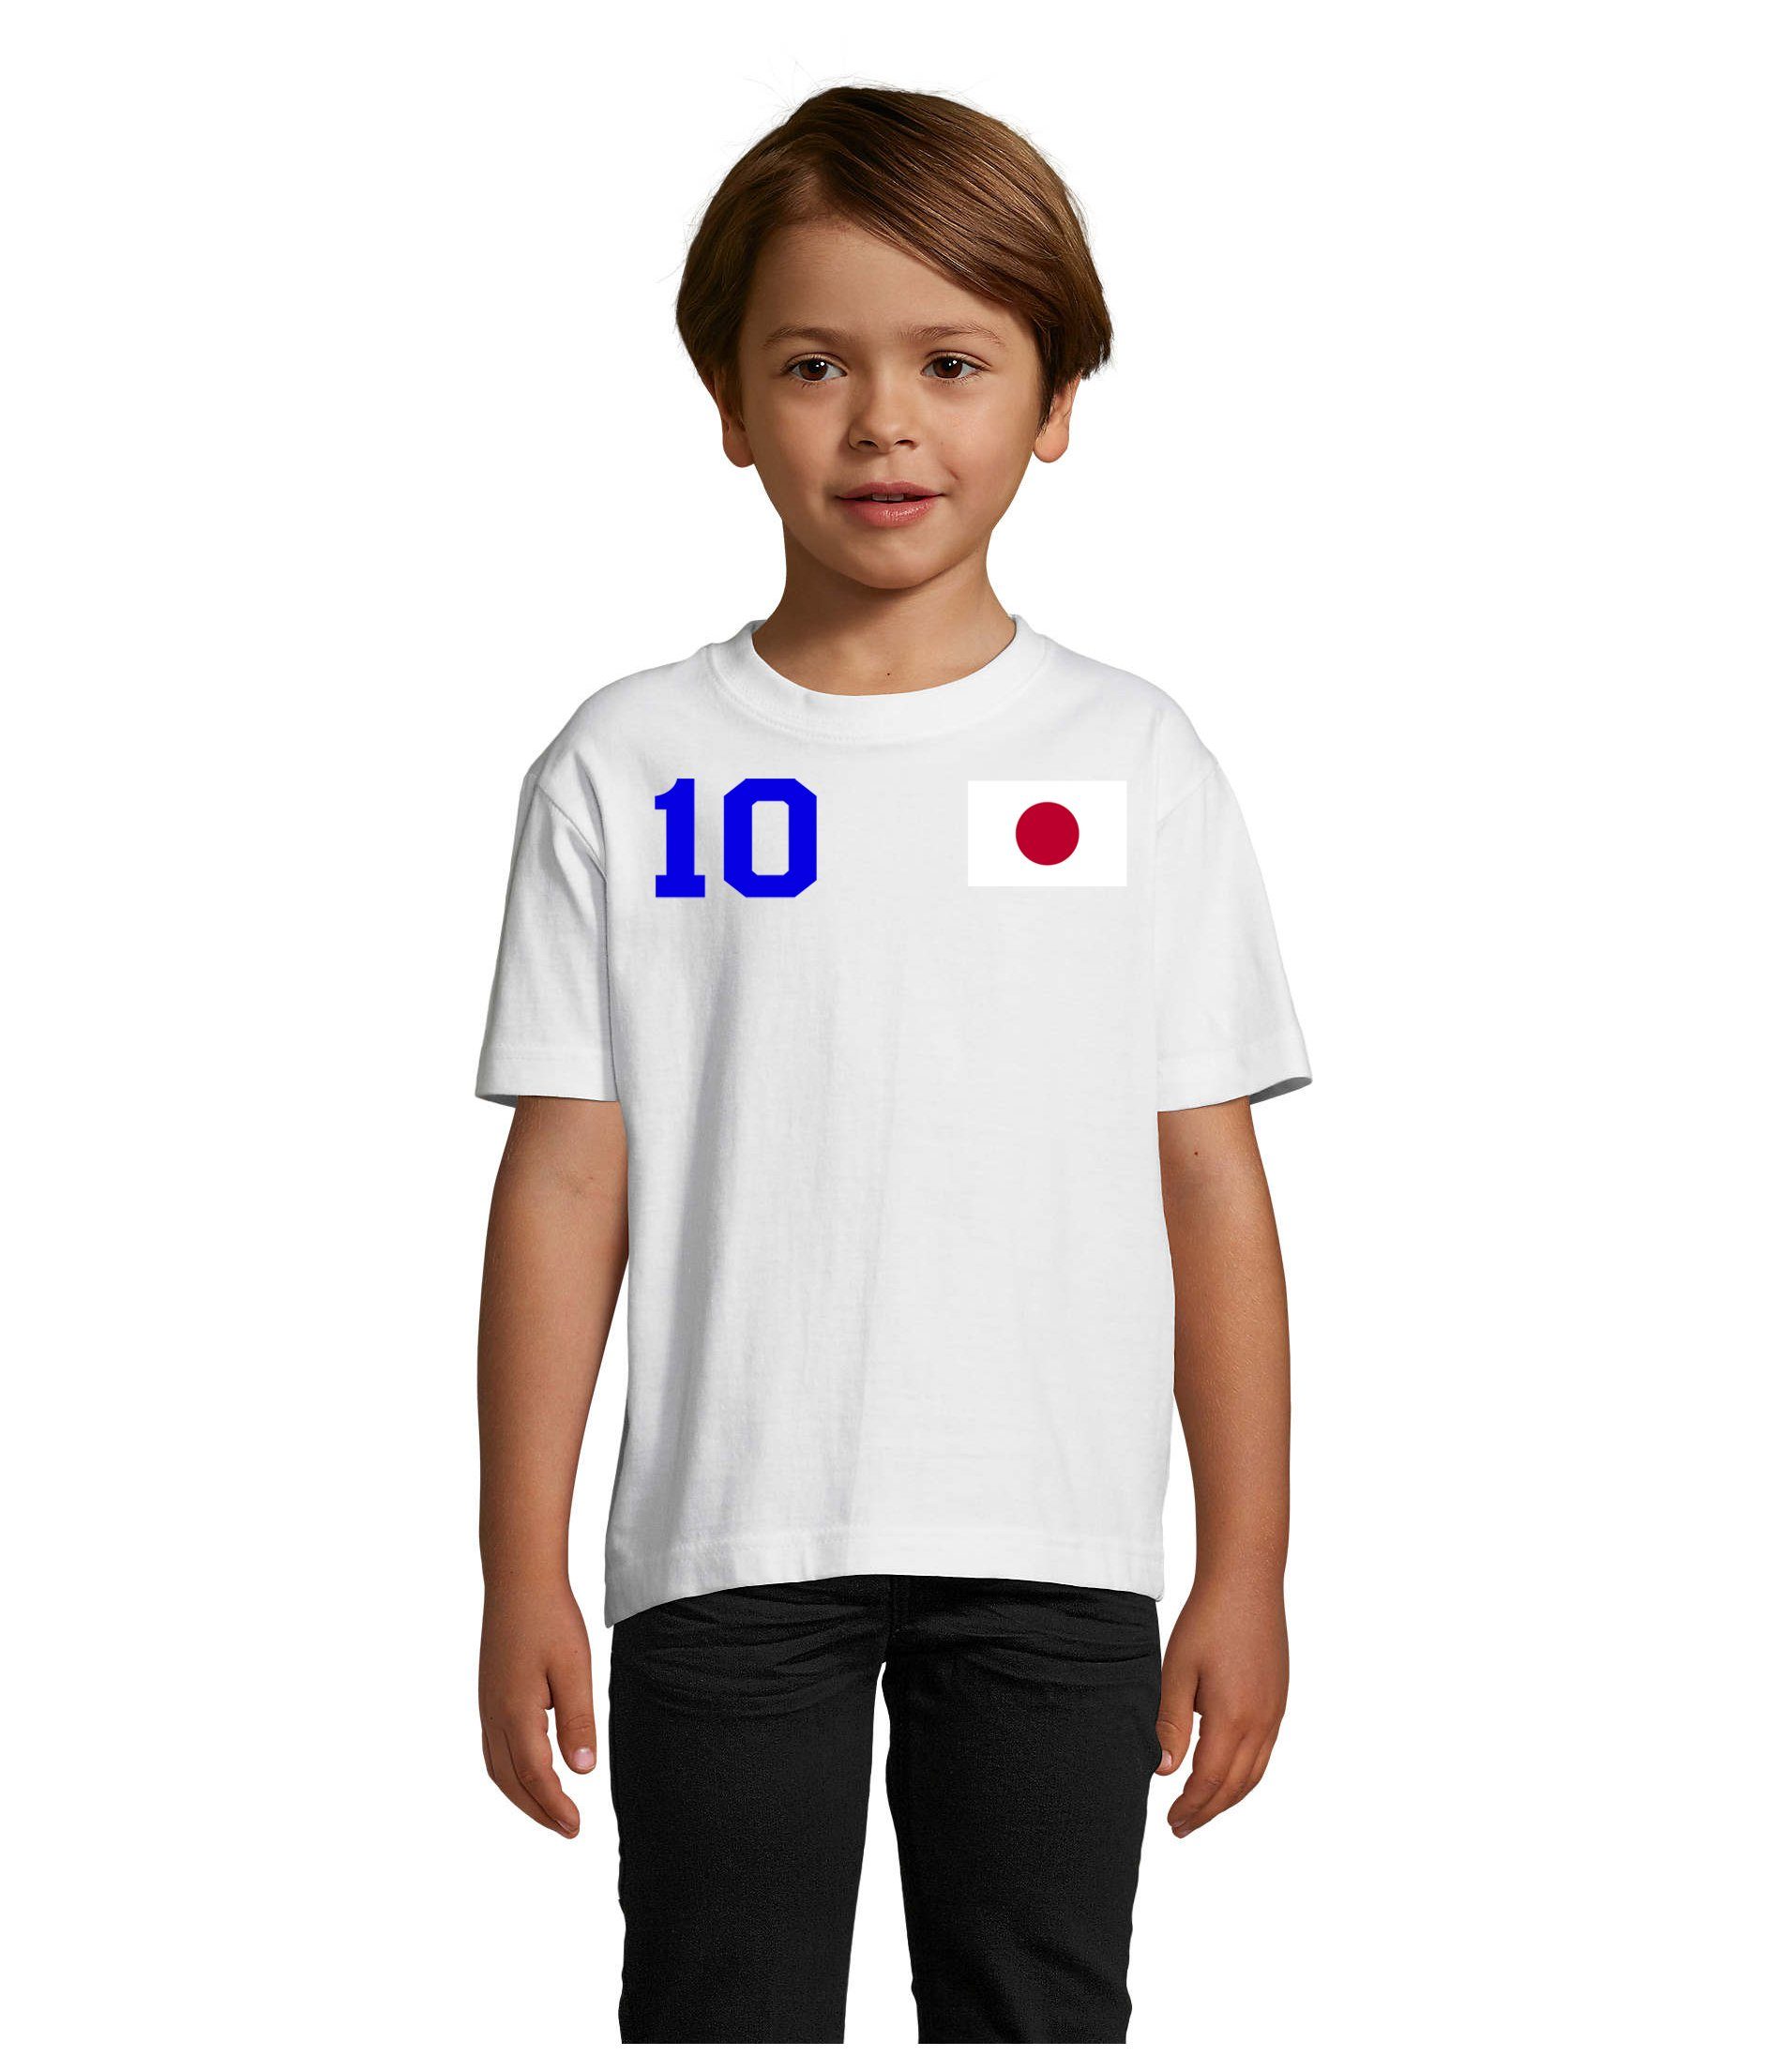 Blondie & Brownie T-Shirt Asien Japan Handball WM Kinder Sport Trikot Fußball Blau/Weiss Meister